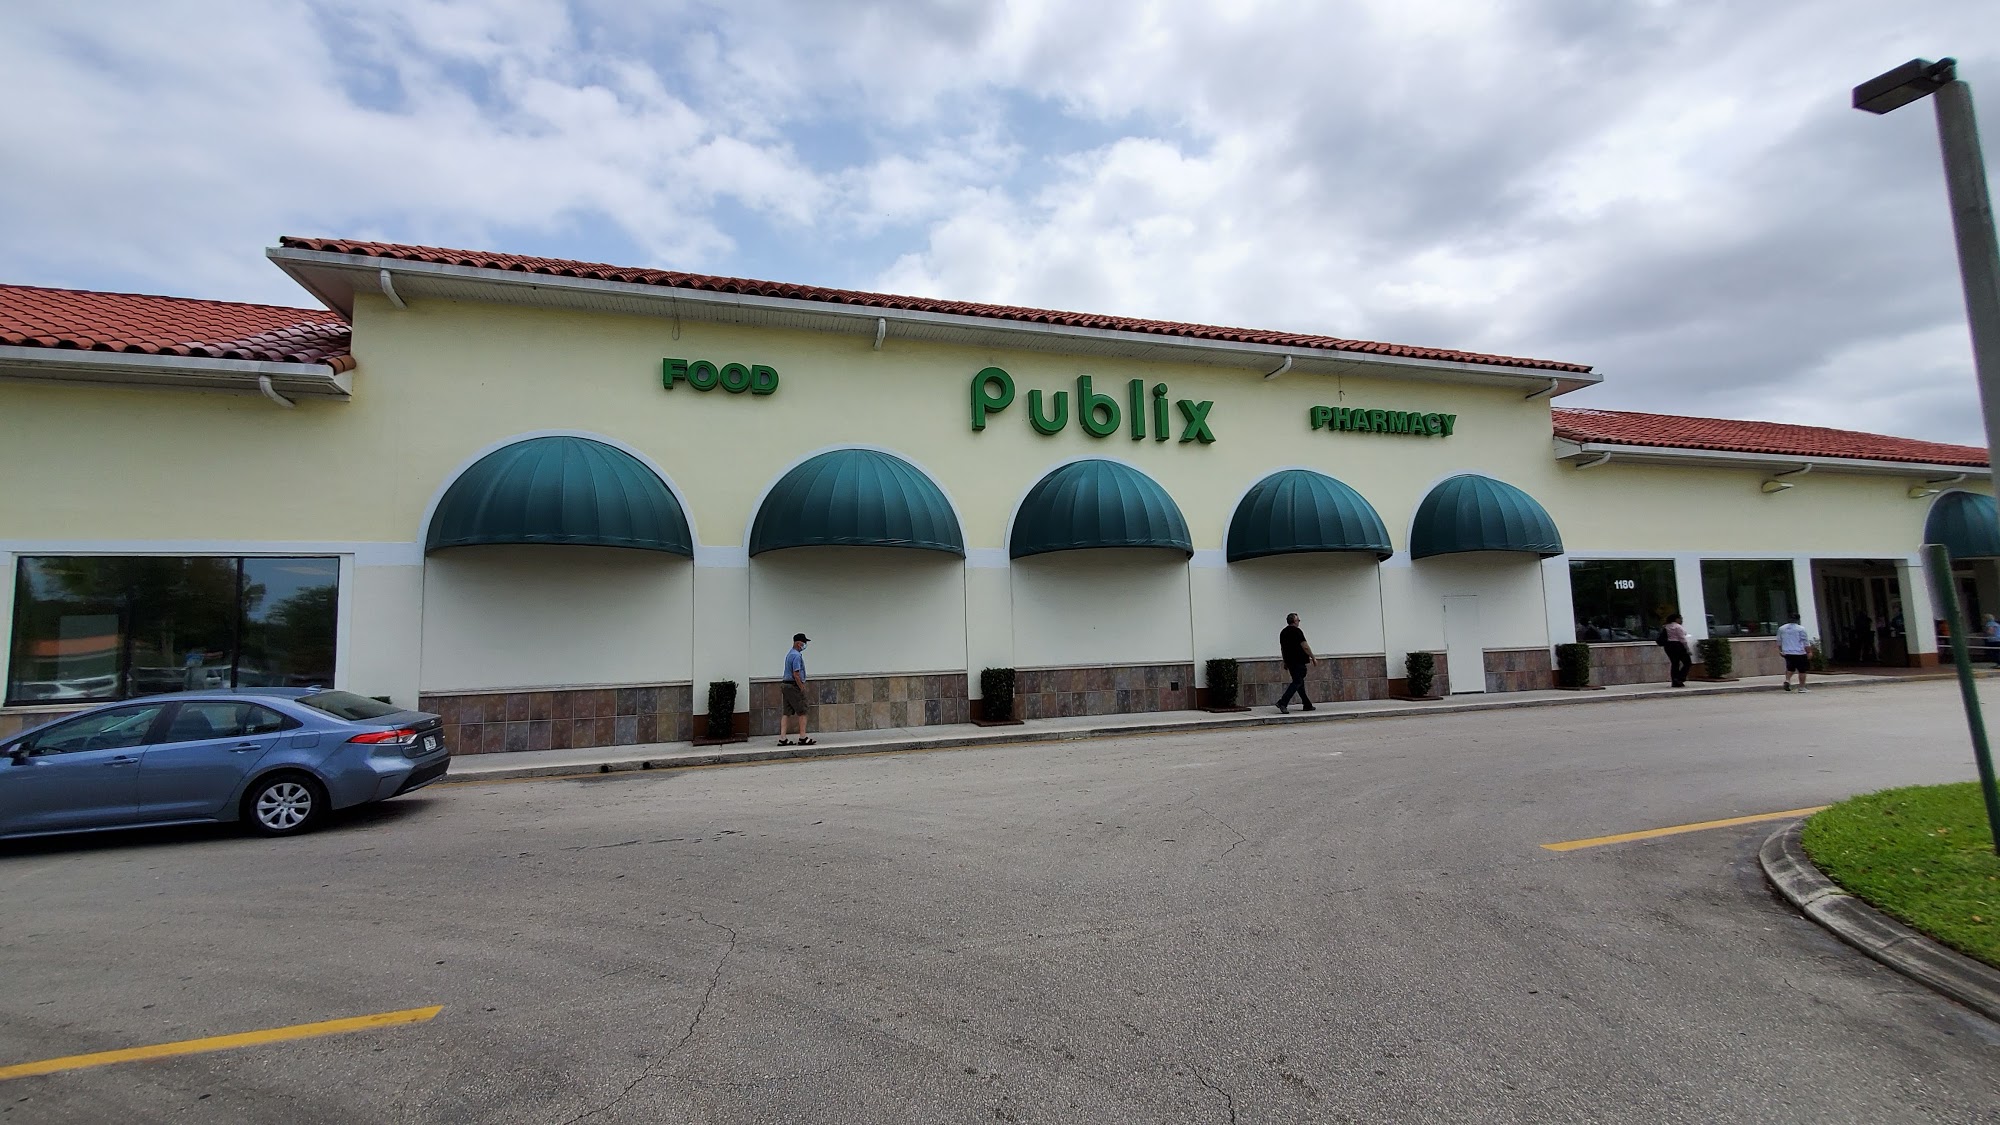 Publix Super Market at The Crossroads at Royal Palm Beach